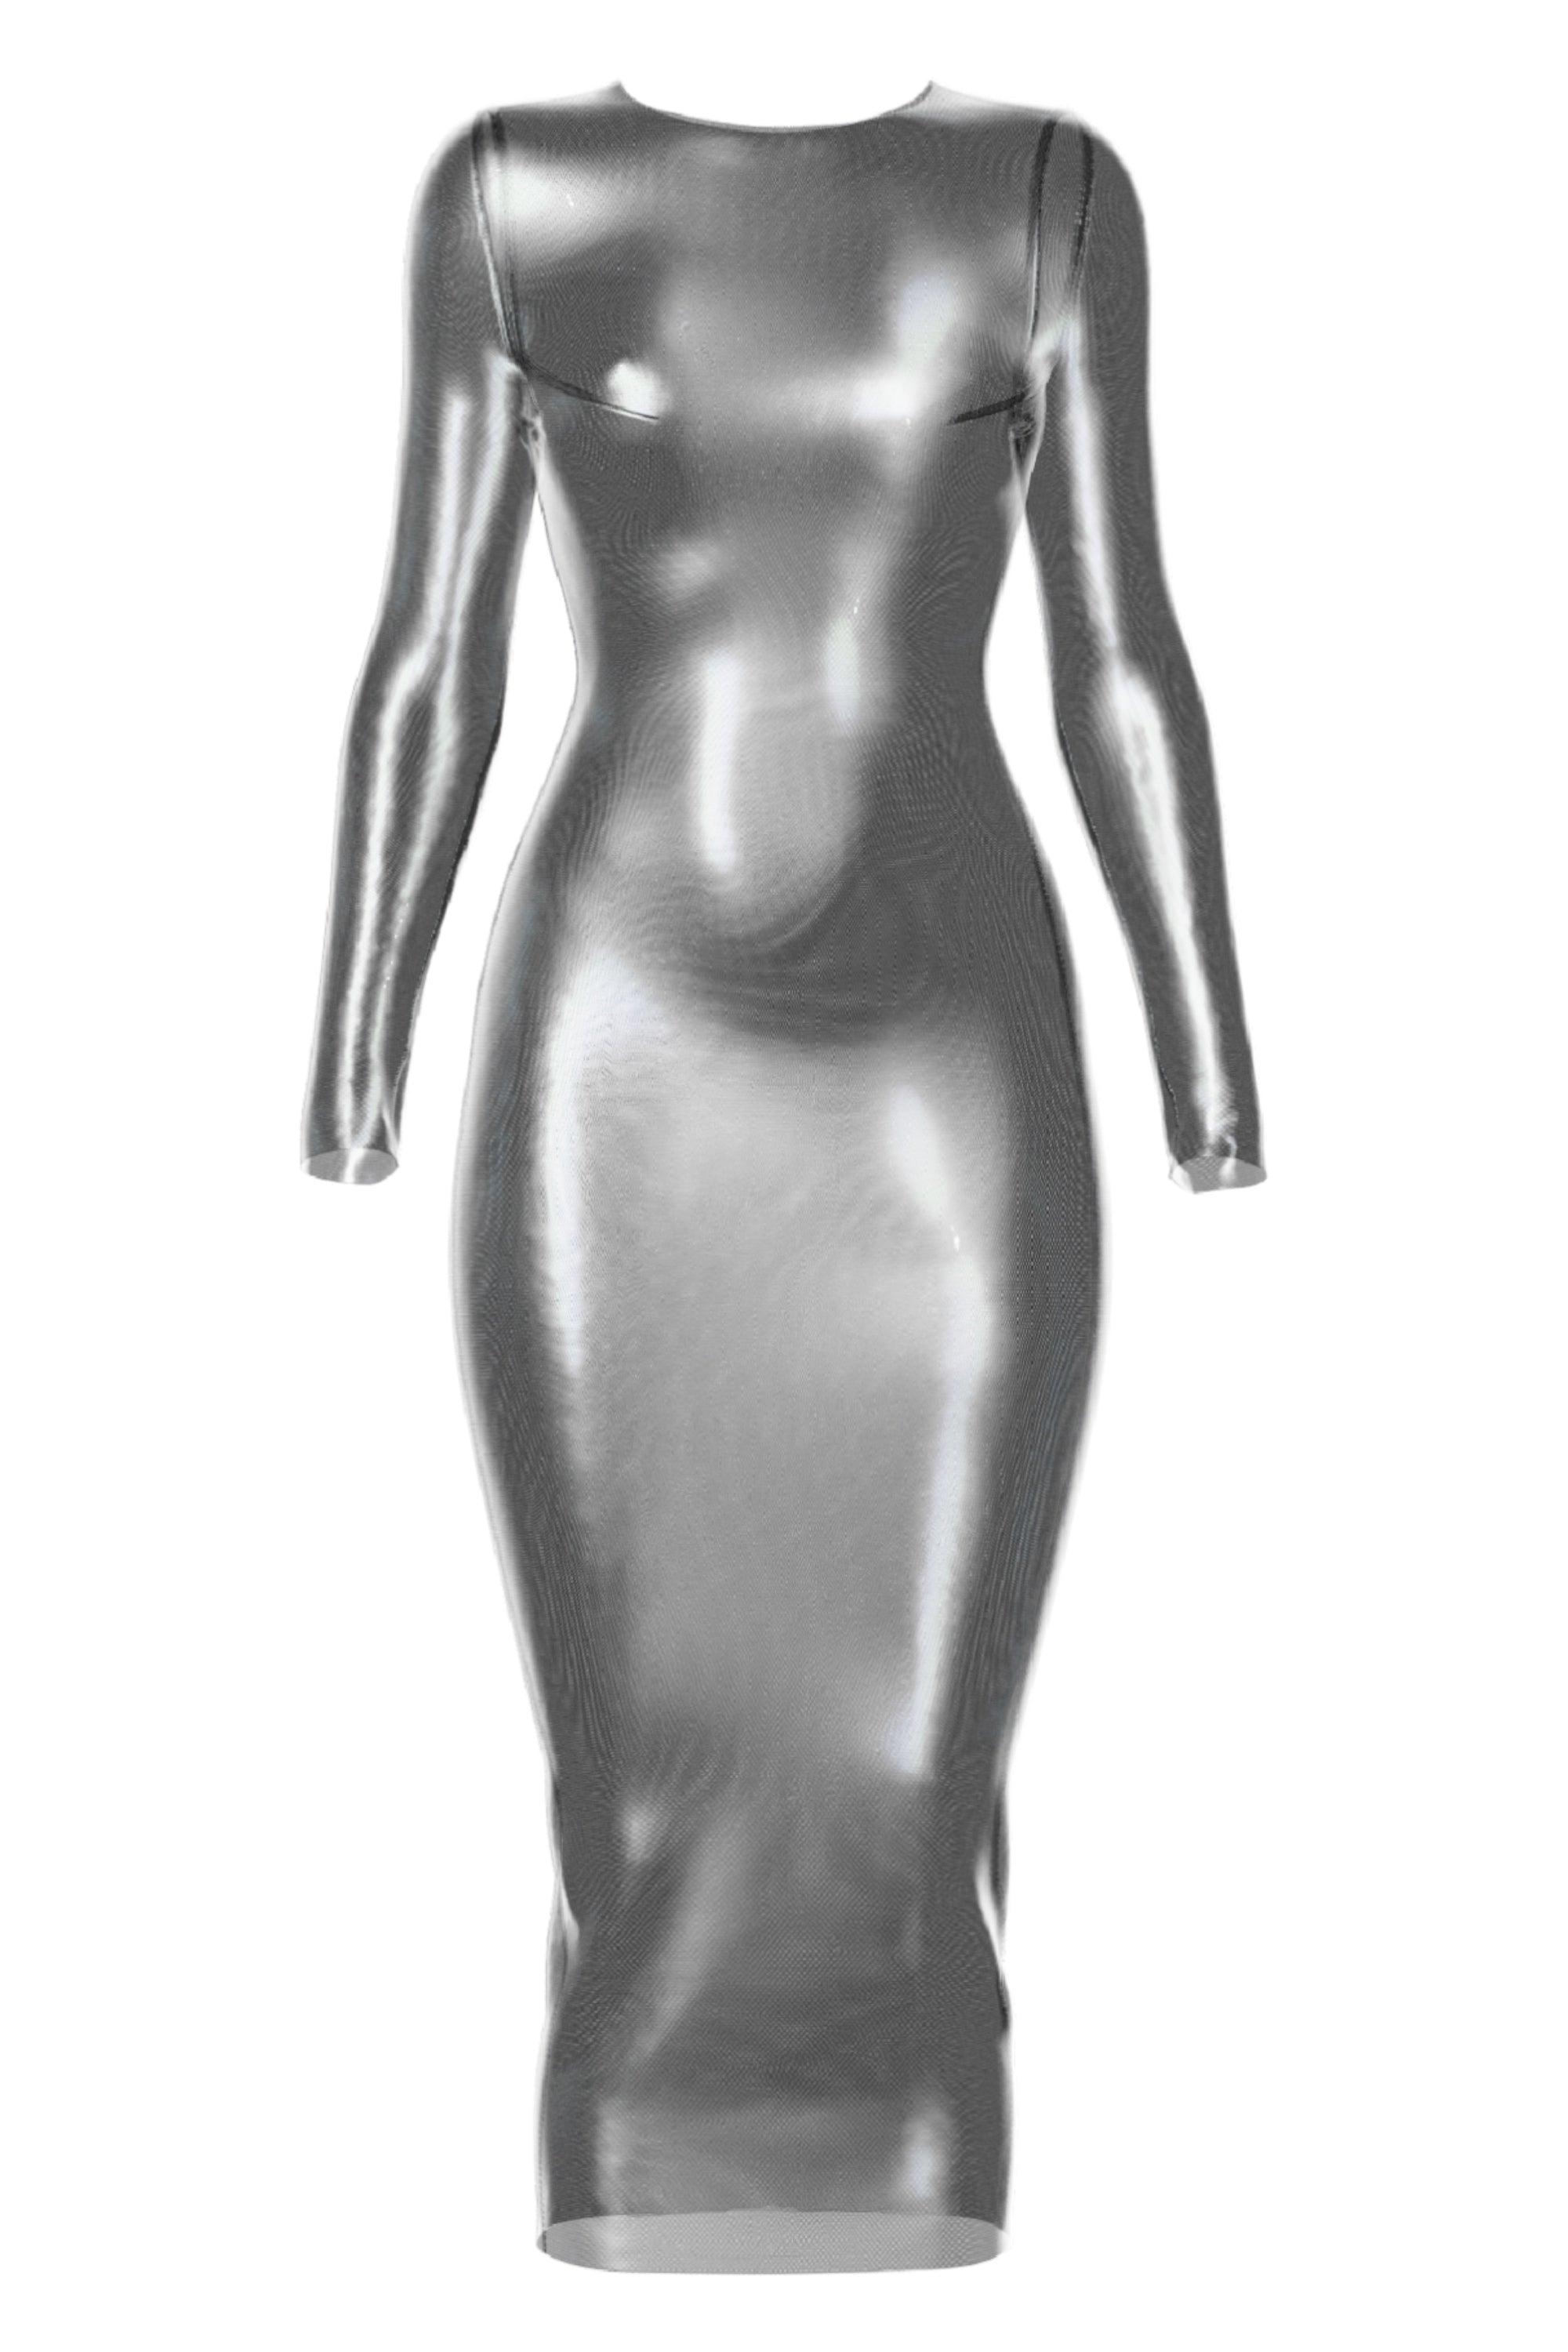 Tefia silver long dress - yesUndress